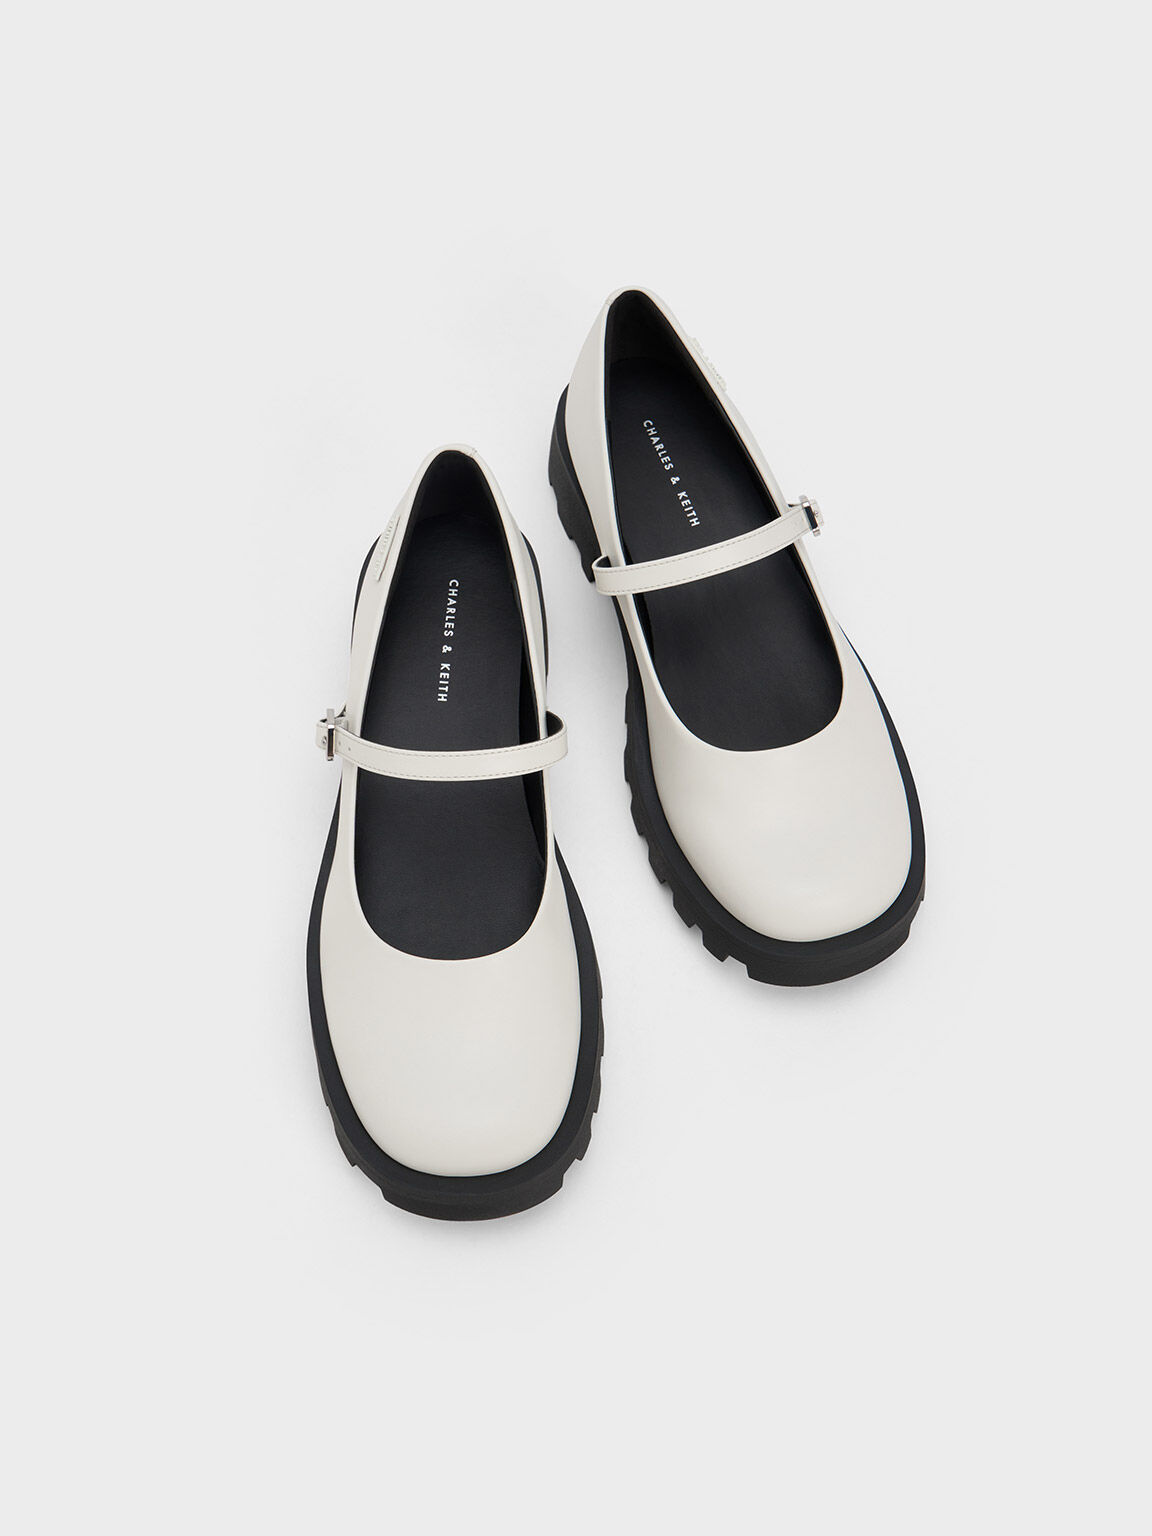 Sepatu Mary Janes Rounded Square-Toe, White, hi-res